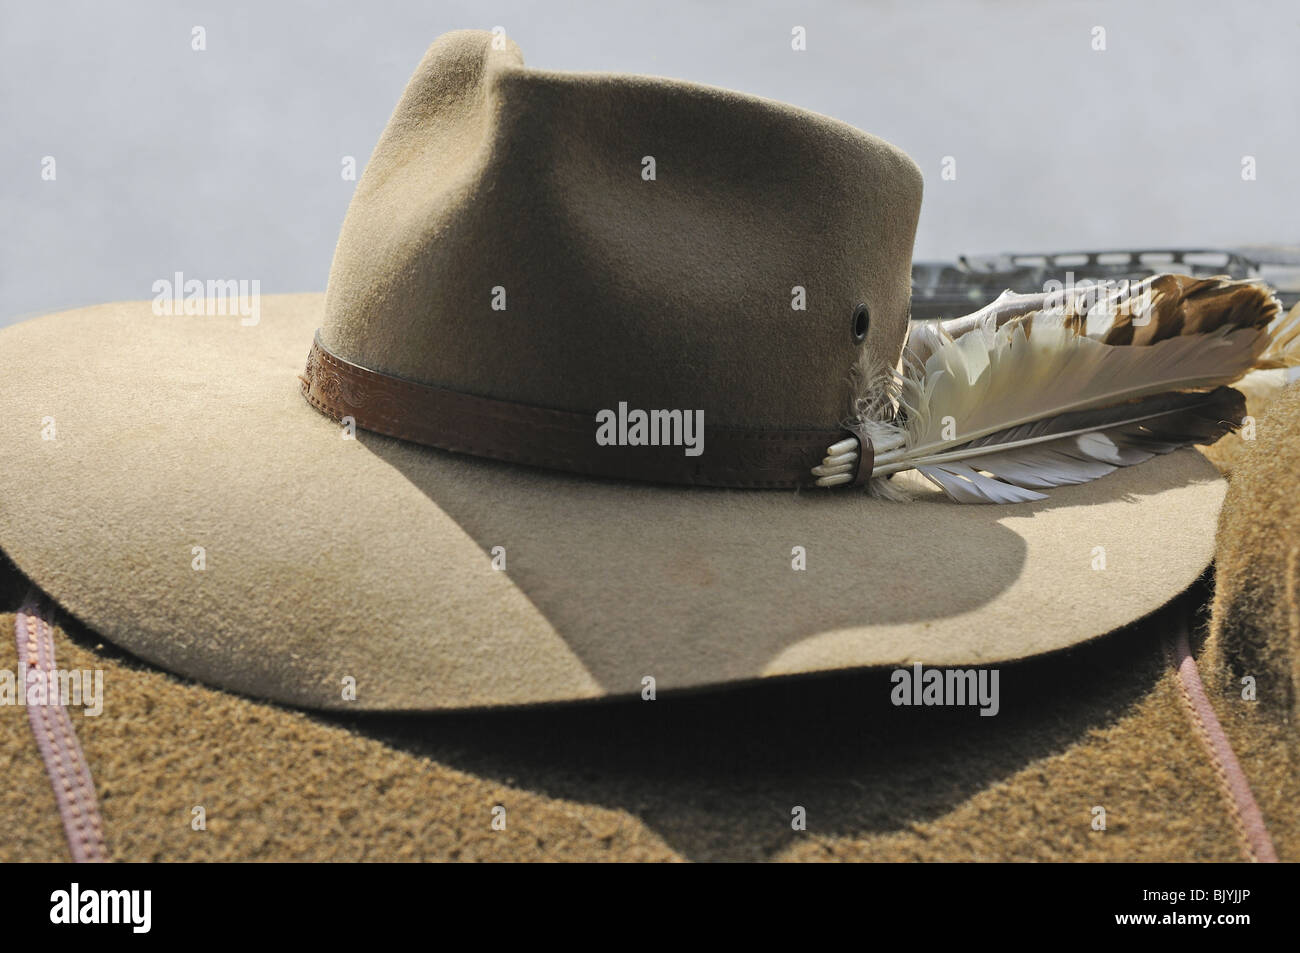 Moda Australiano sombrero de paja de vaquero CA2290284